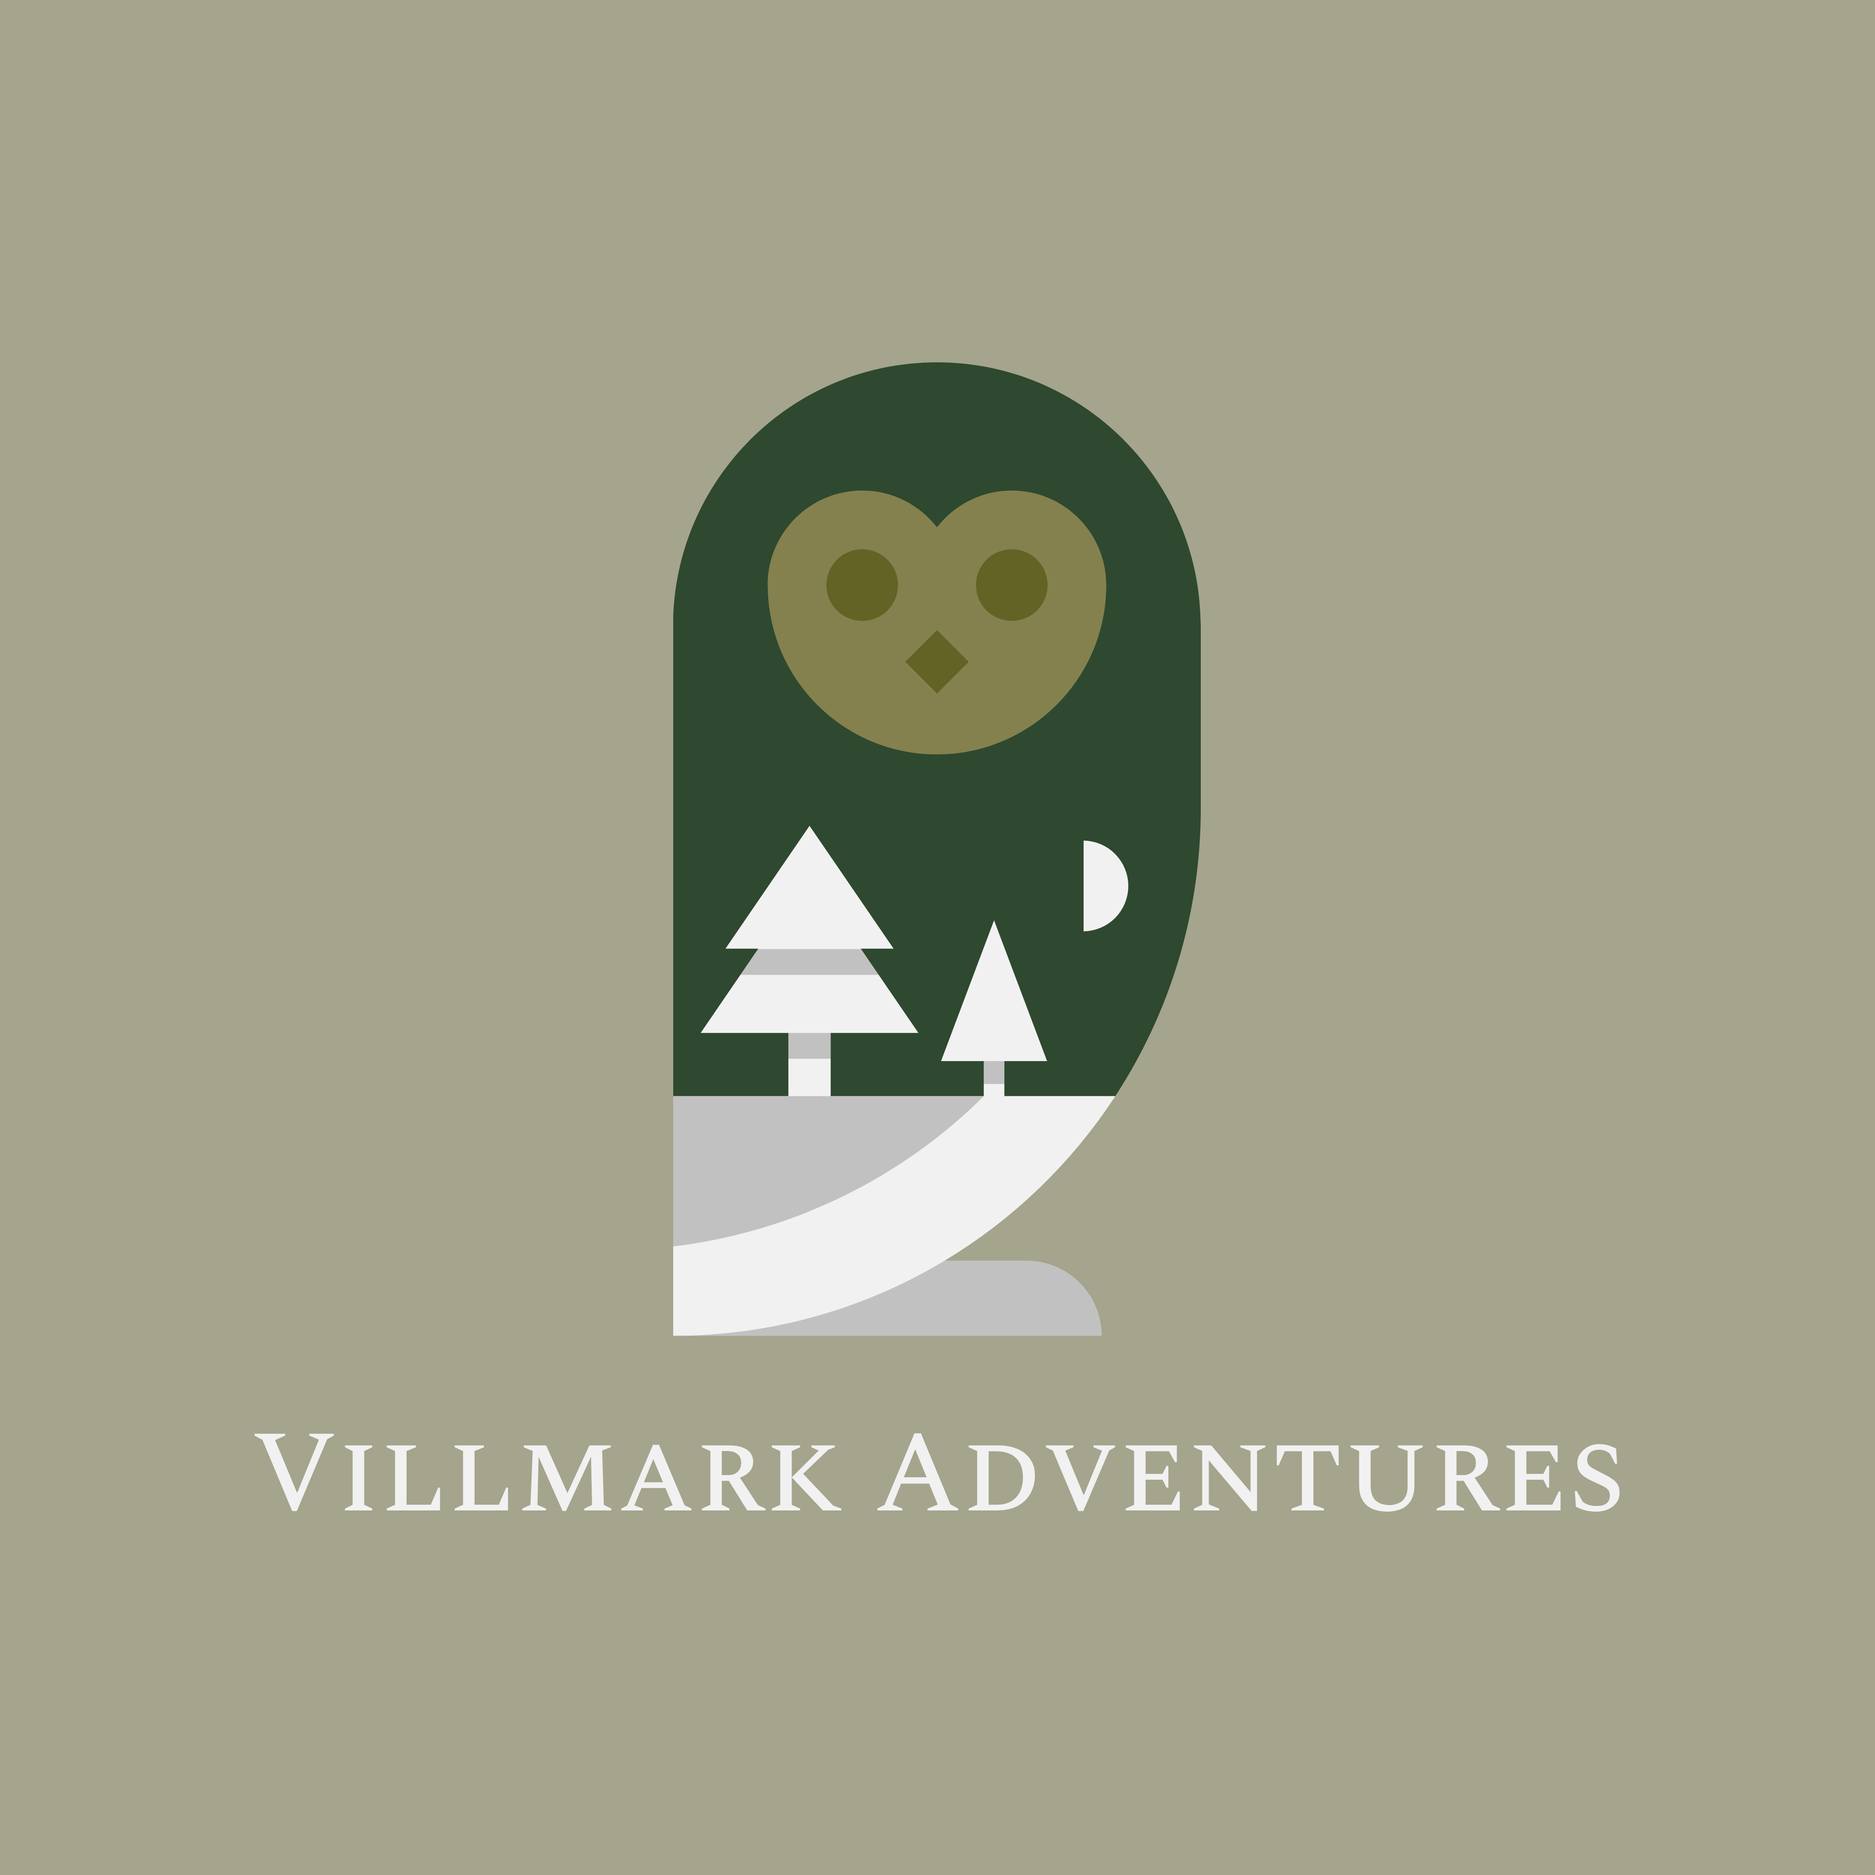 Villmark Adventures